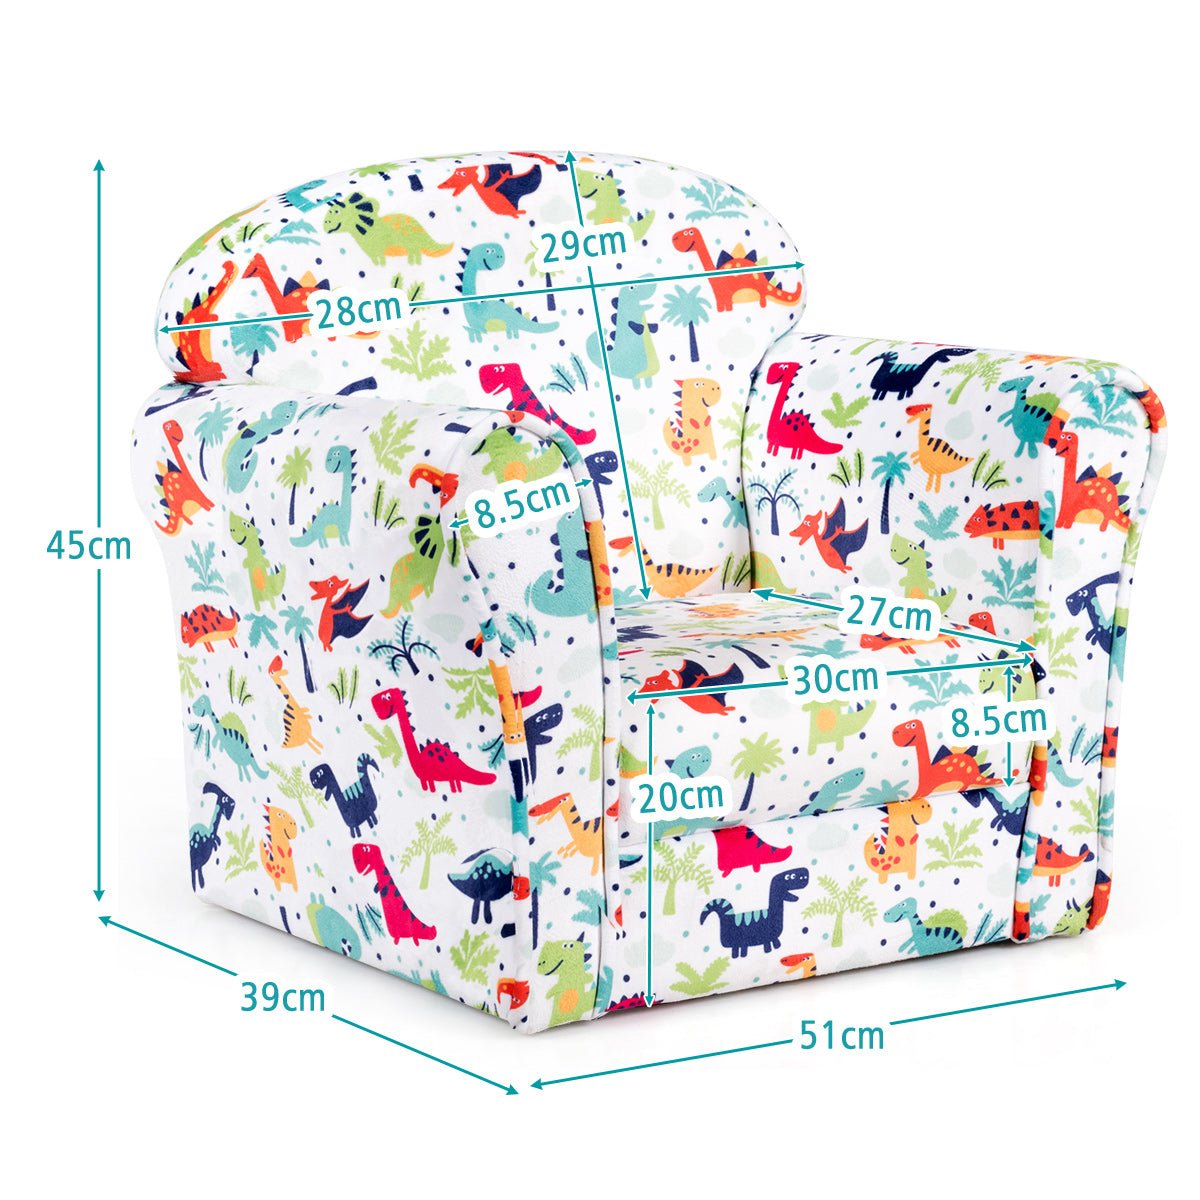 Get Velvet Kids Sofa with Lovely Pattern: Soft Seating for Baby Room